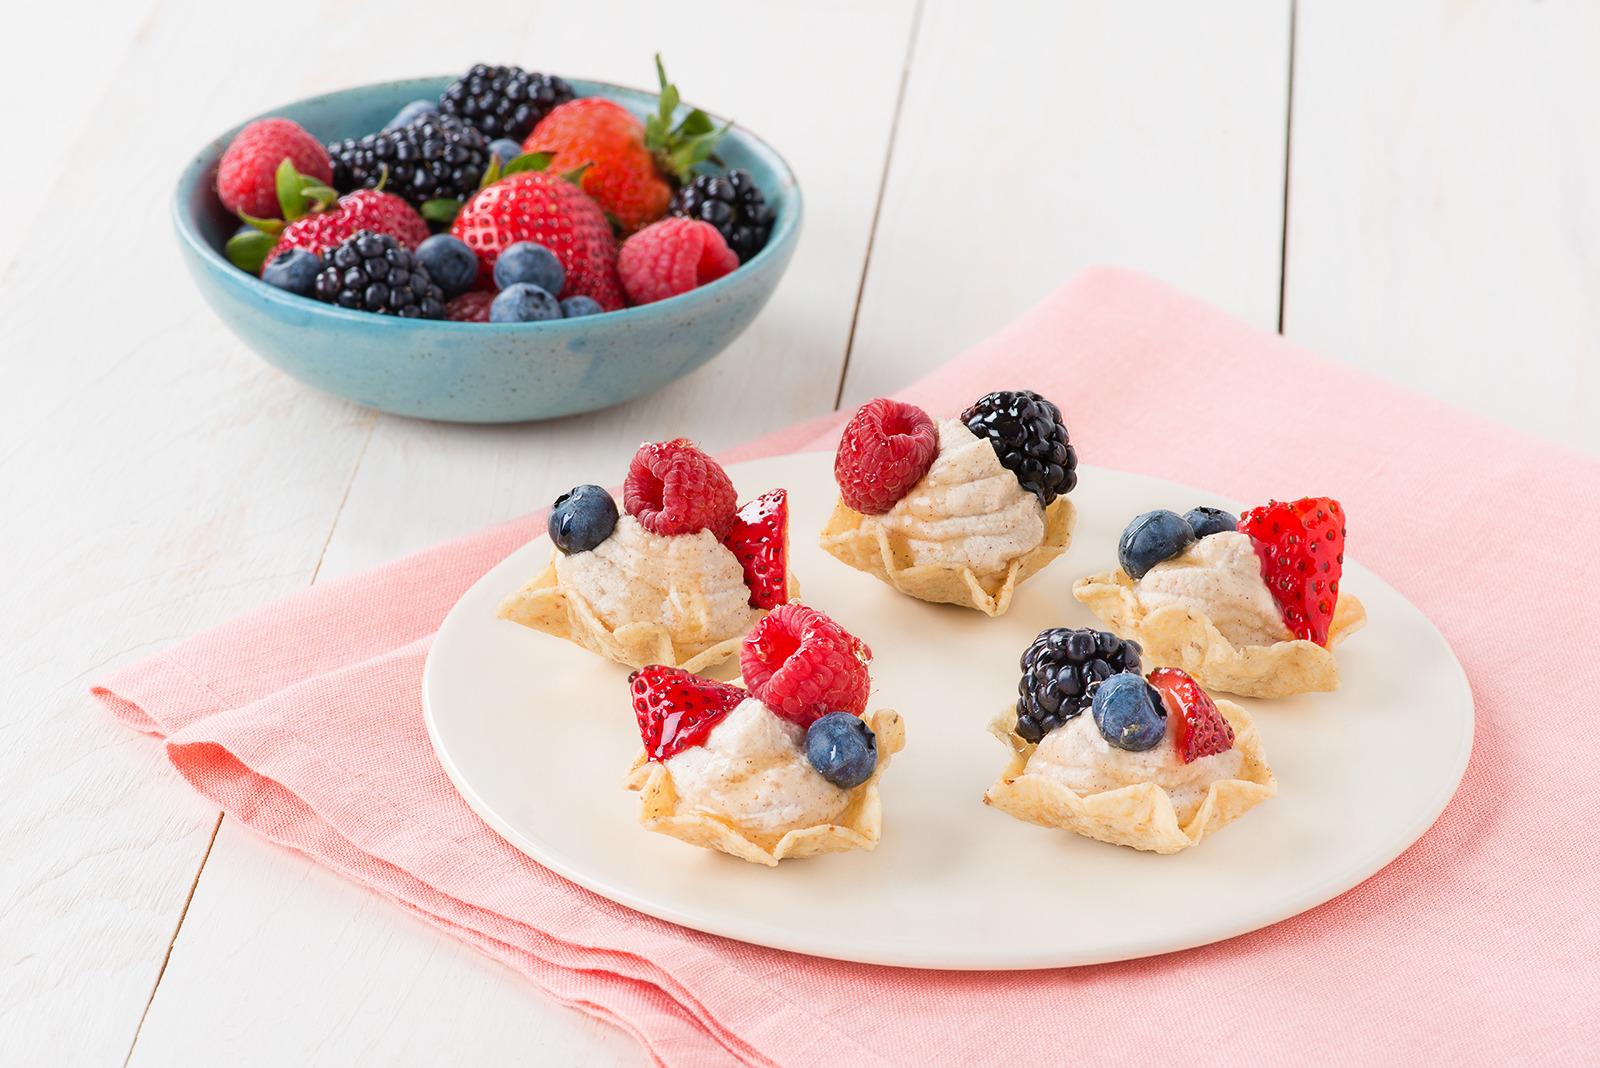 Sweet Ricotta “Tarts” with Fresh Berries